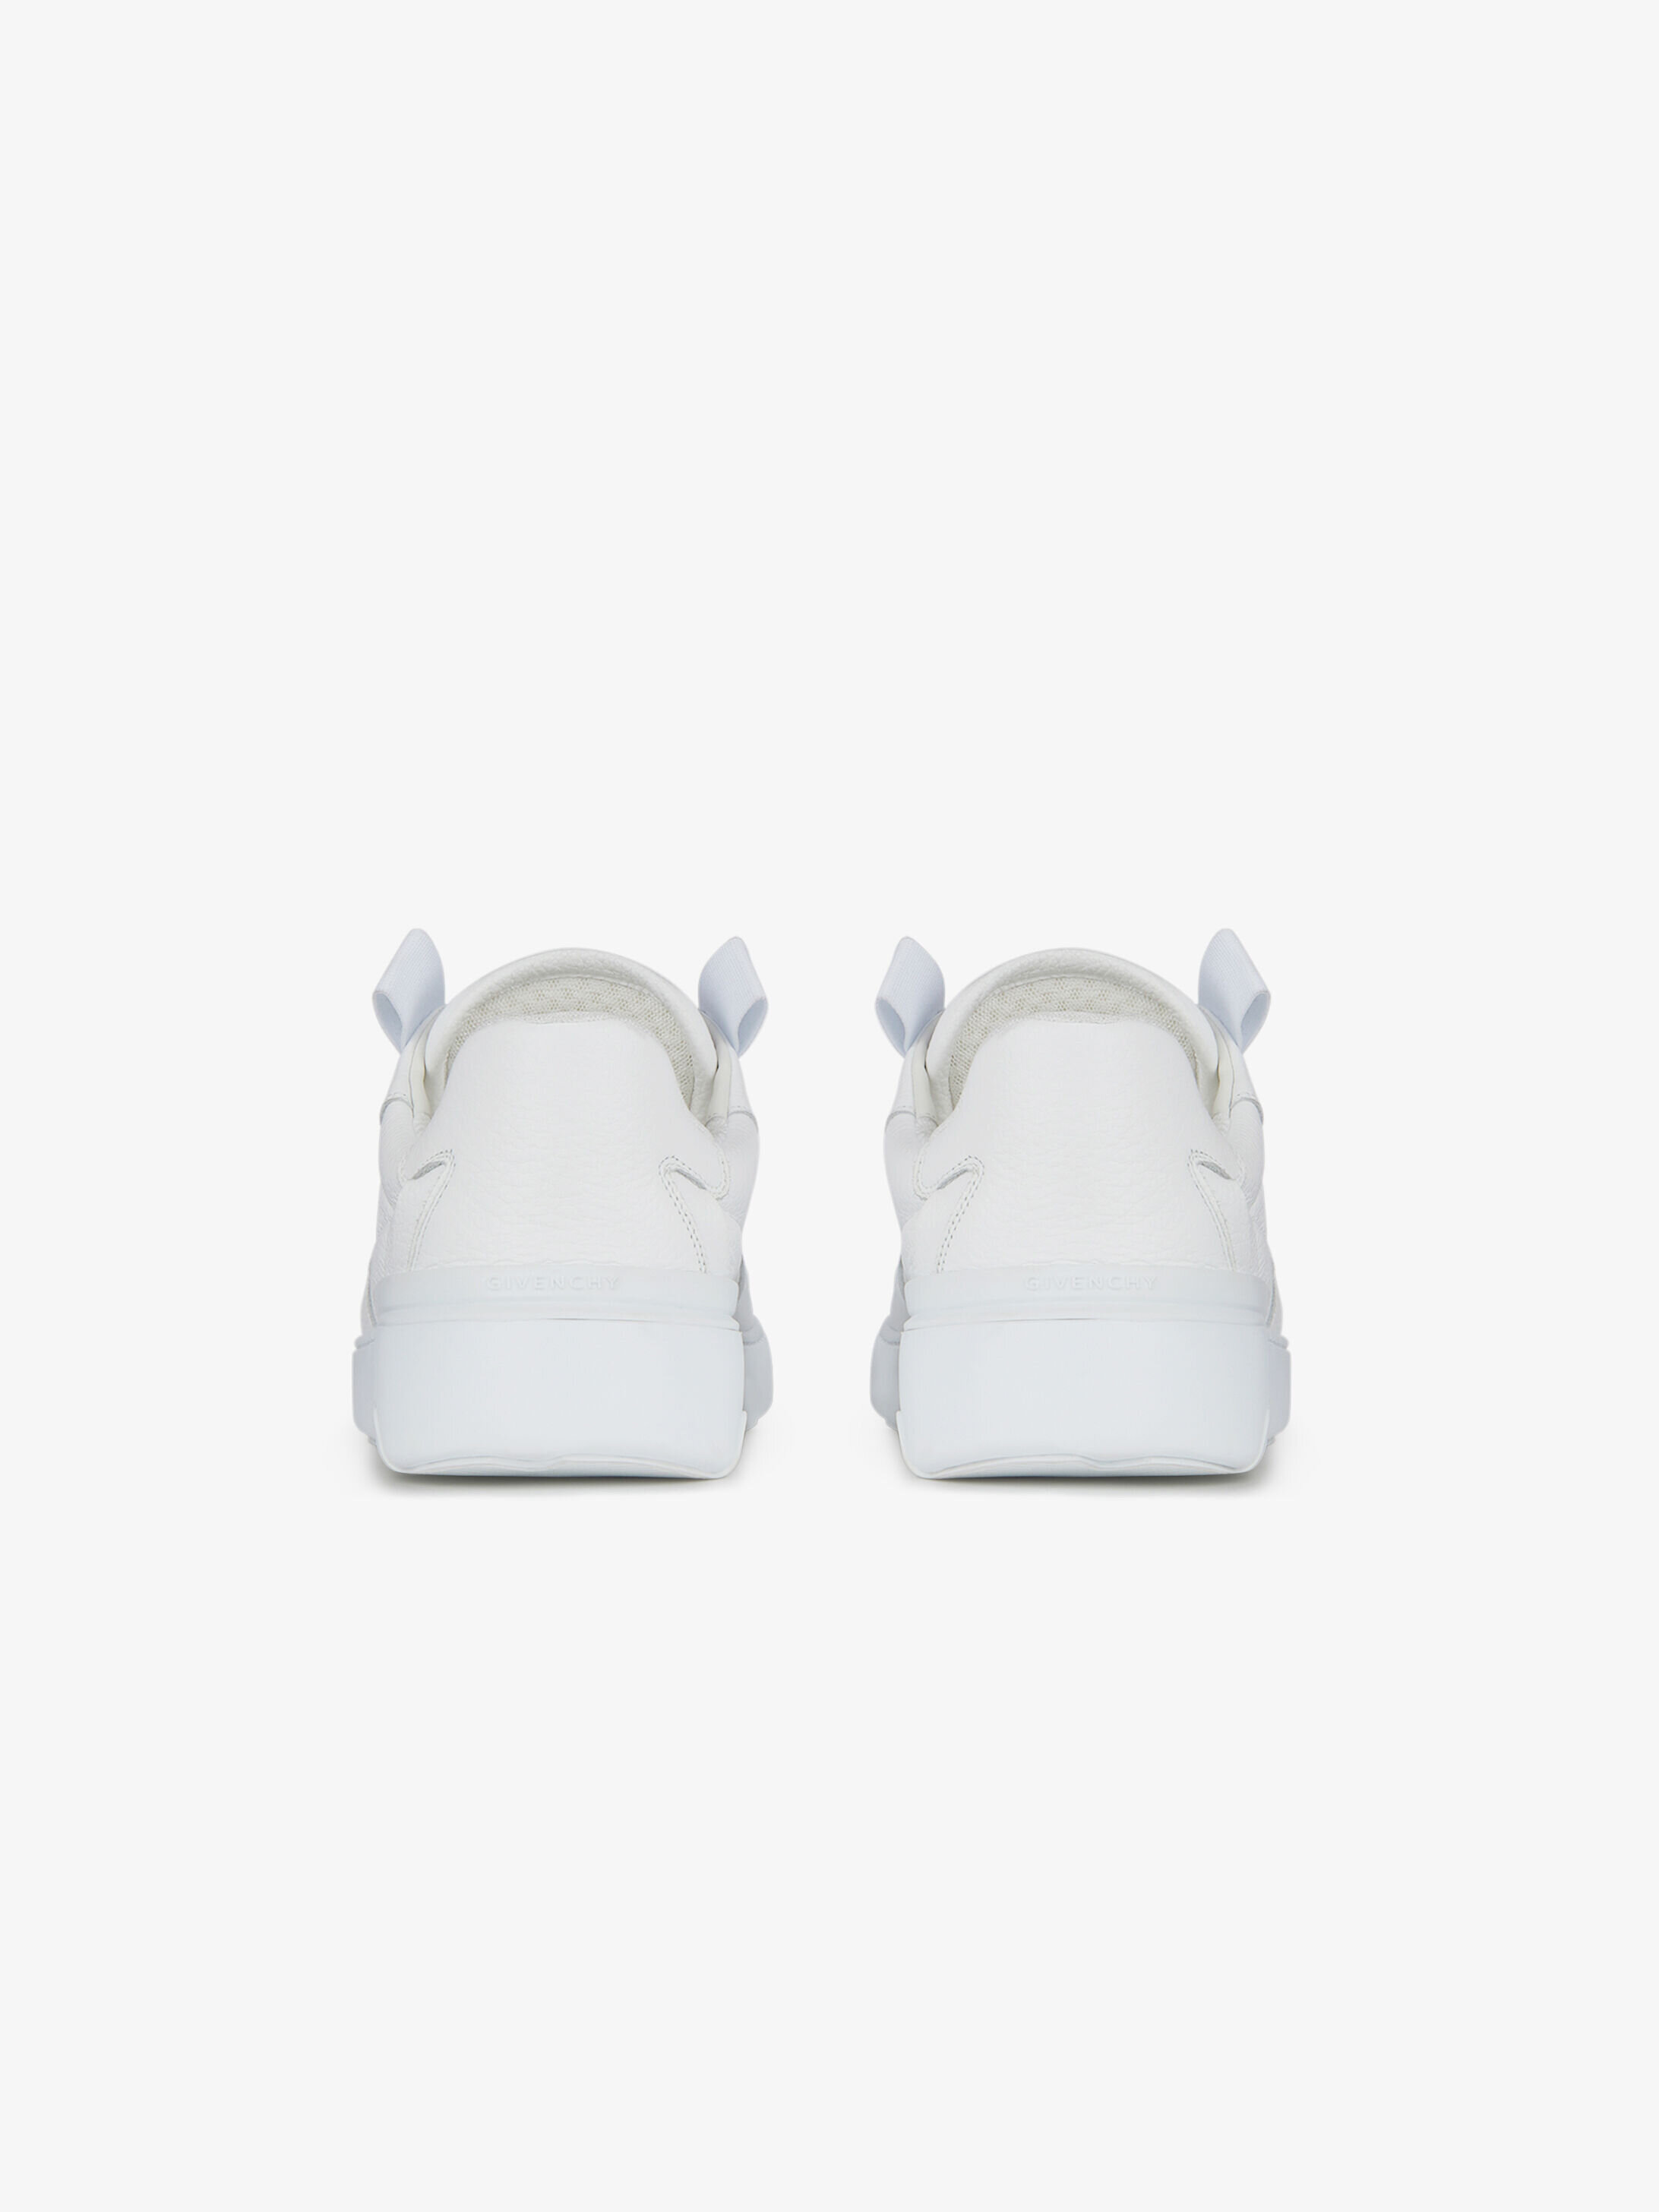 Givenchi Shoes side.jpg